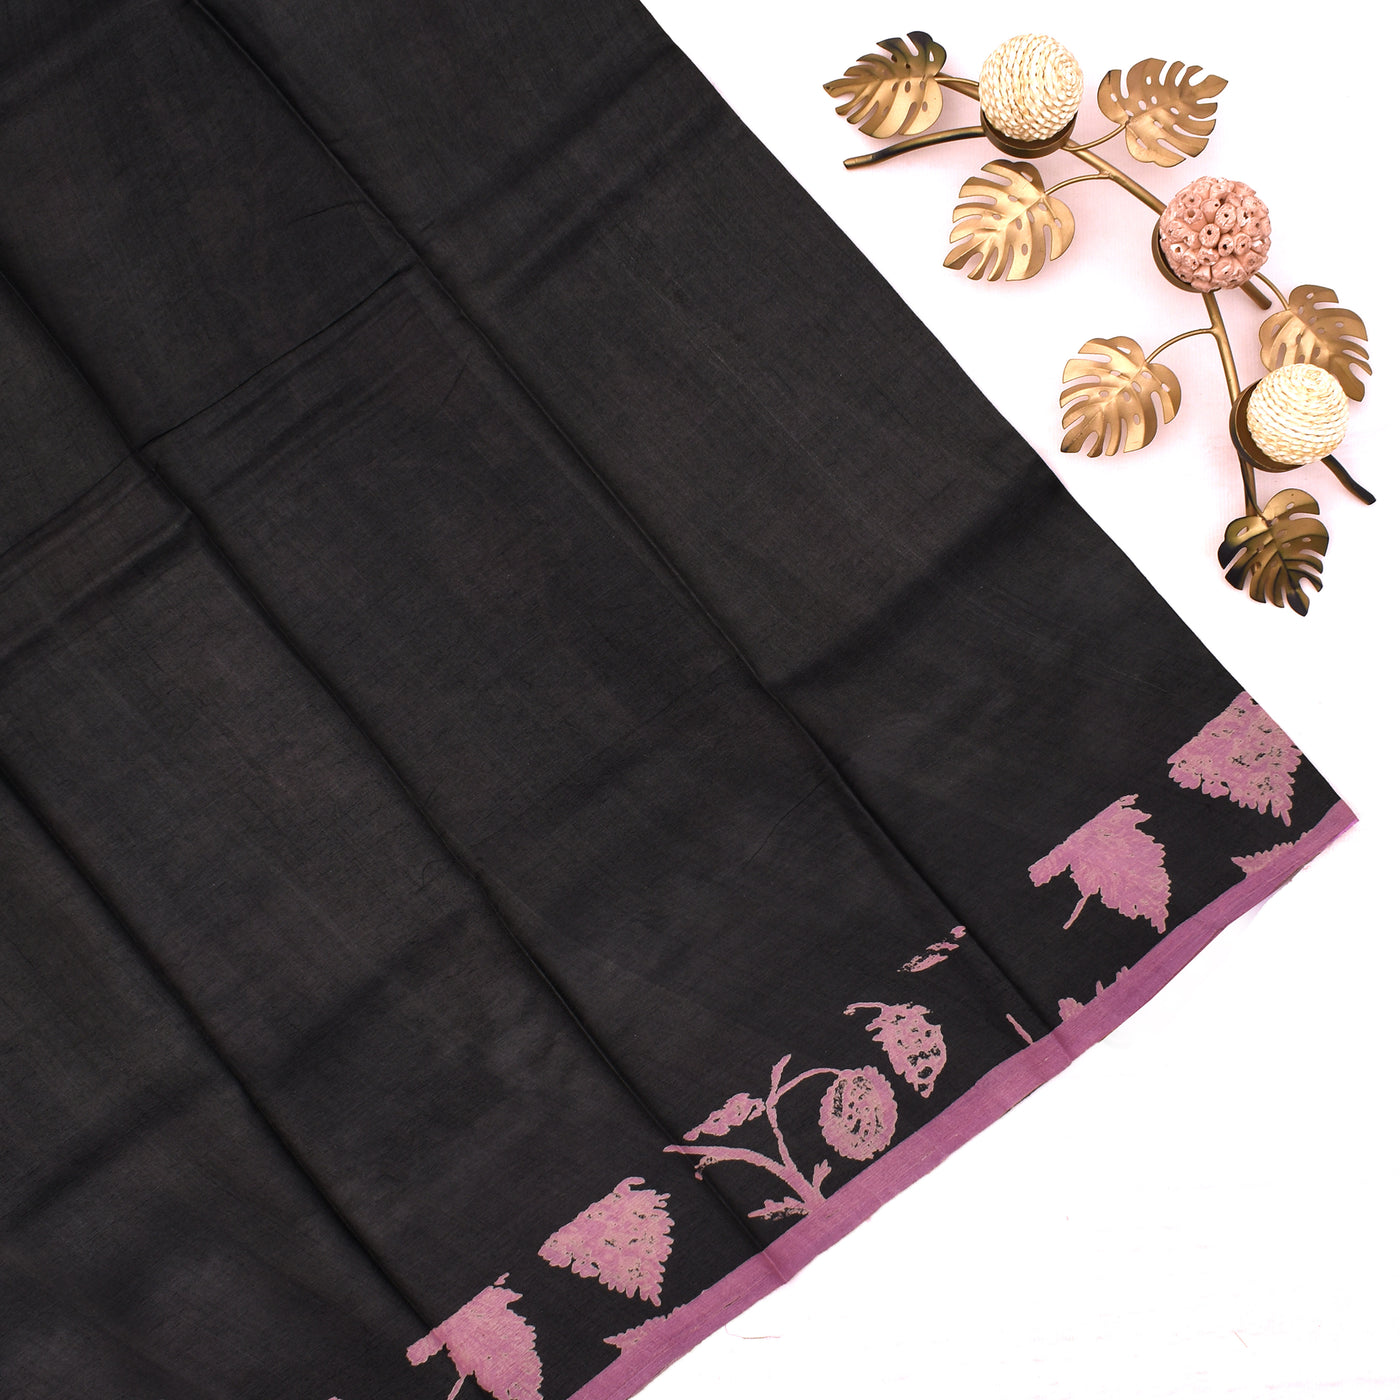 Black Tussar Silk Saree with Small Butta Leaf Design